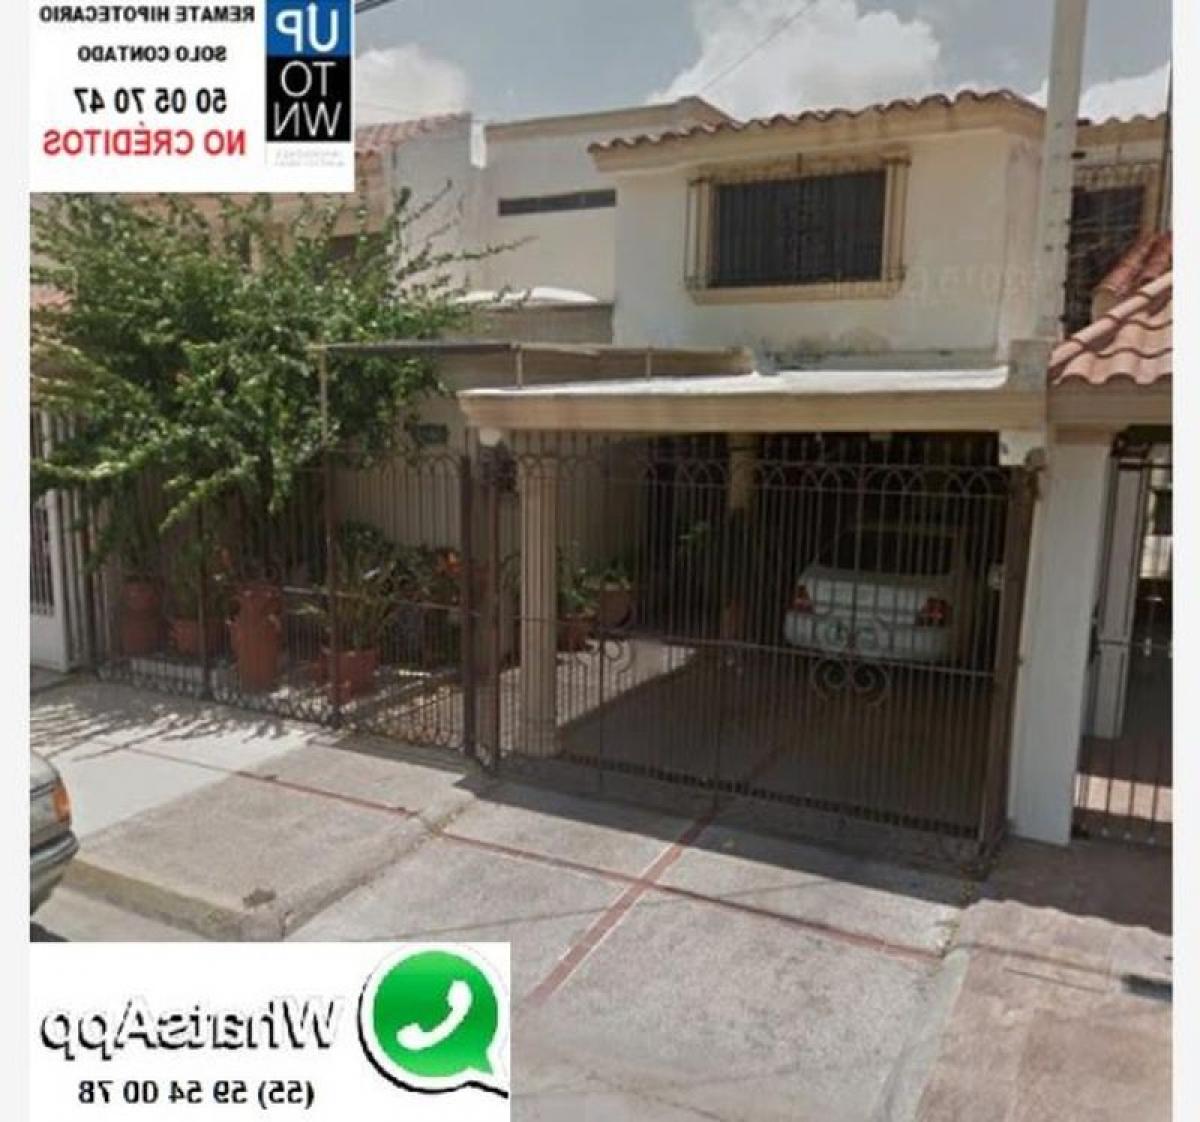 Picture of Home For Sale in Sinaloa, Sinaloa, Mexico